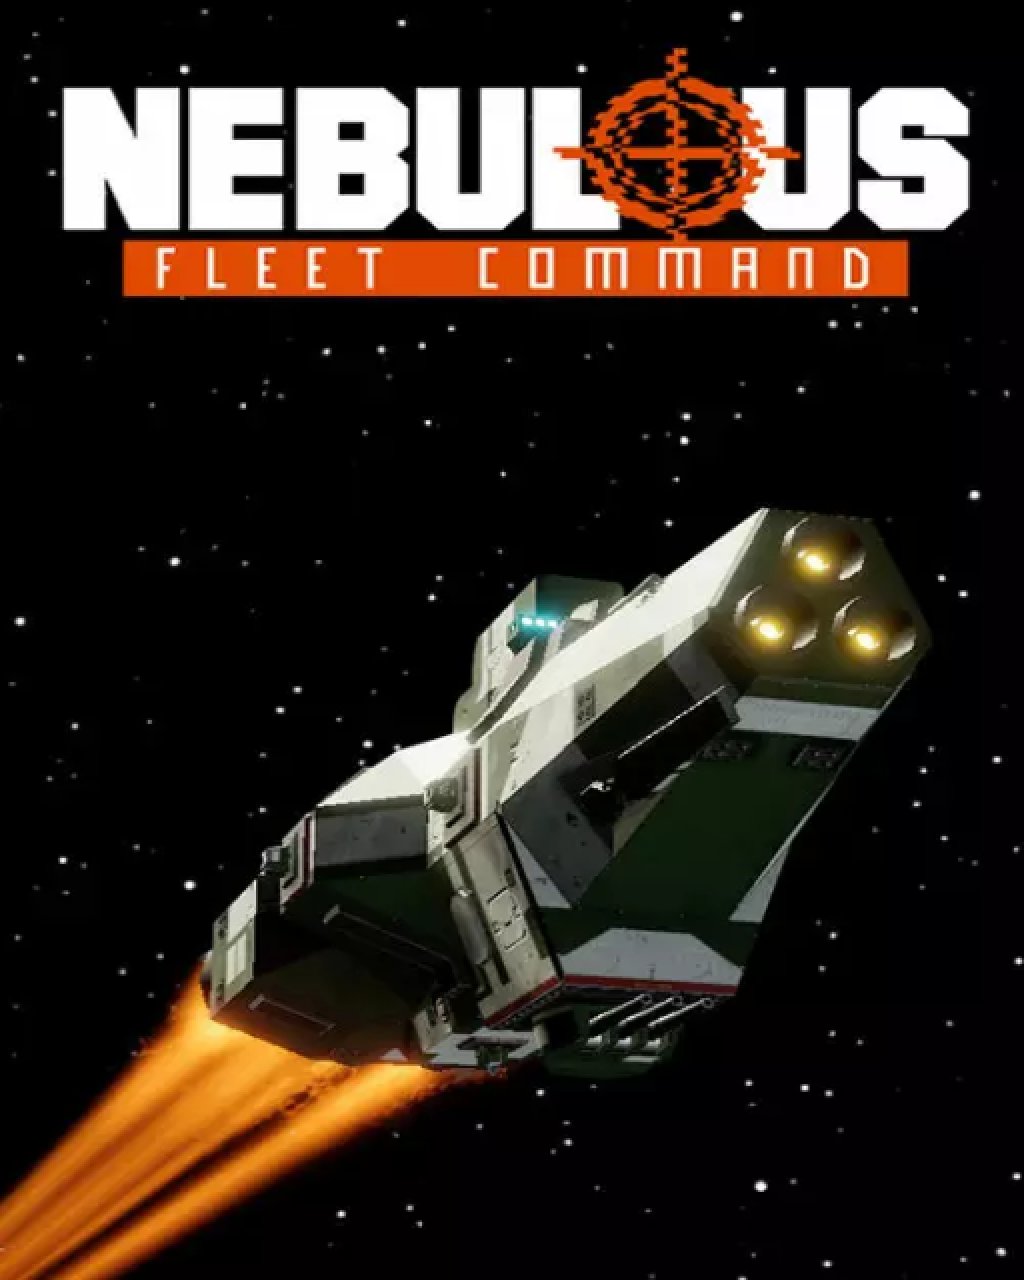 NEBULOUS Fleet Command